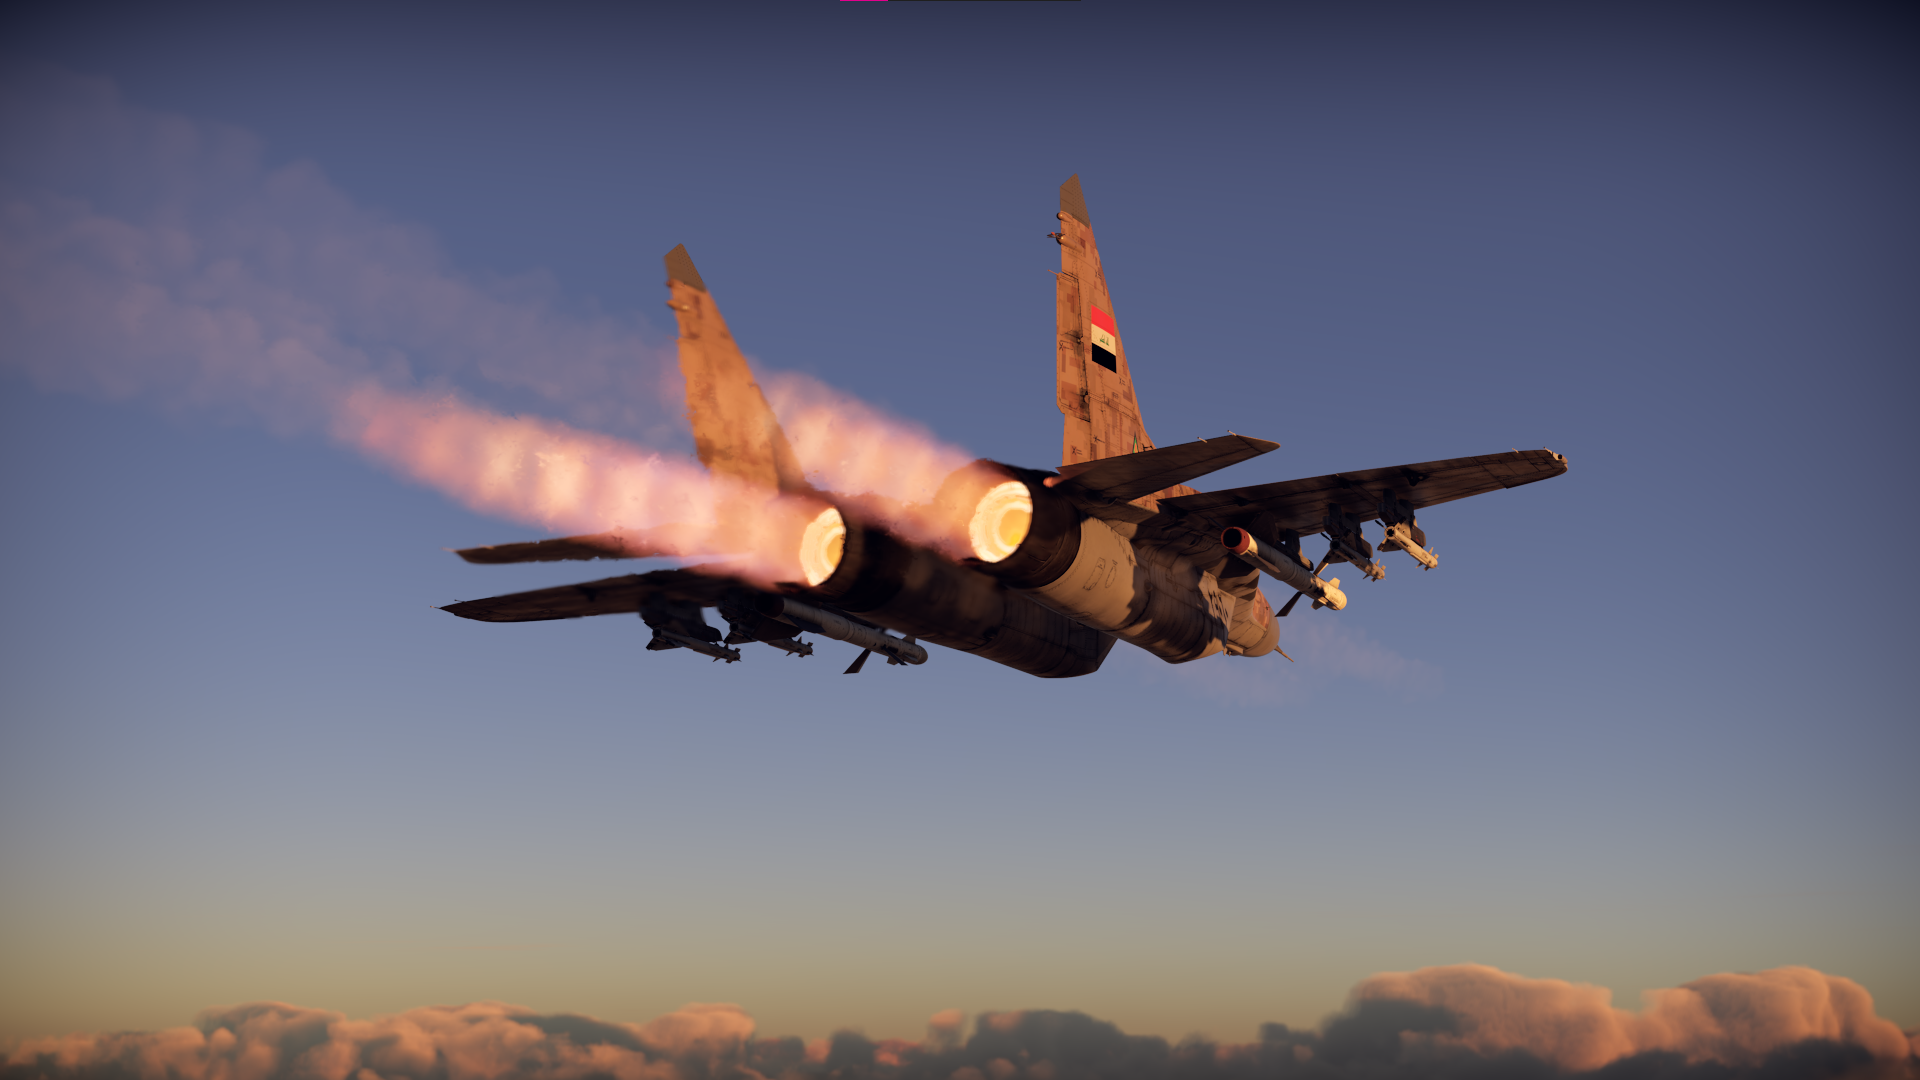 General 1920x1080 War Thunder iraqi air force jet fighter aircraft sky video games CGI Mikoyan MiG-29 afterburner screen shot shock diamonds